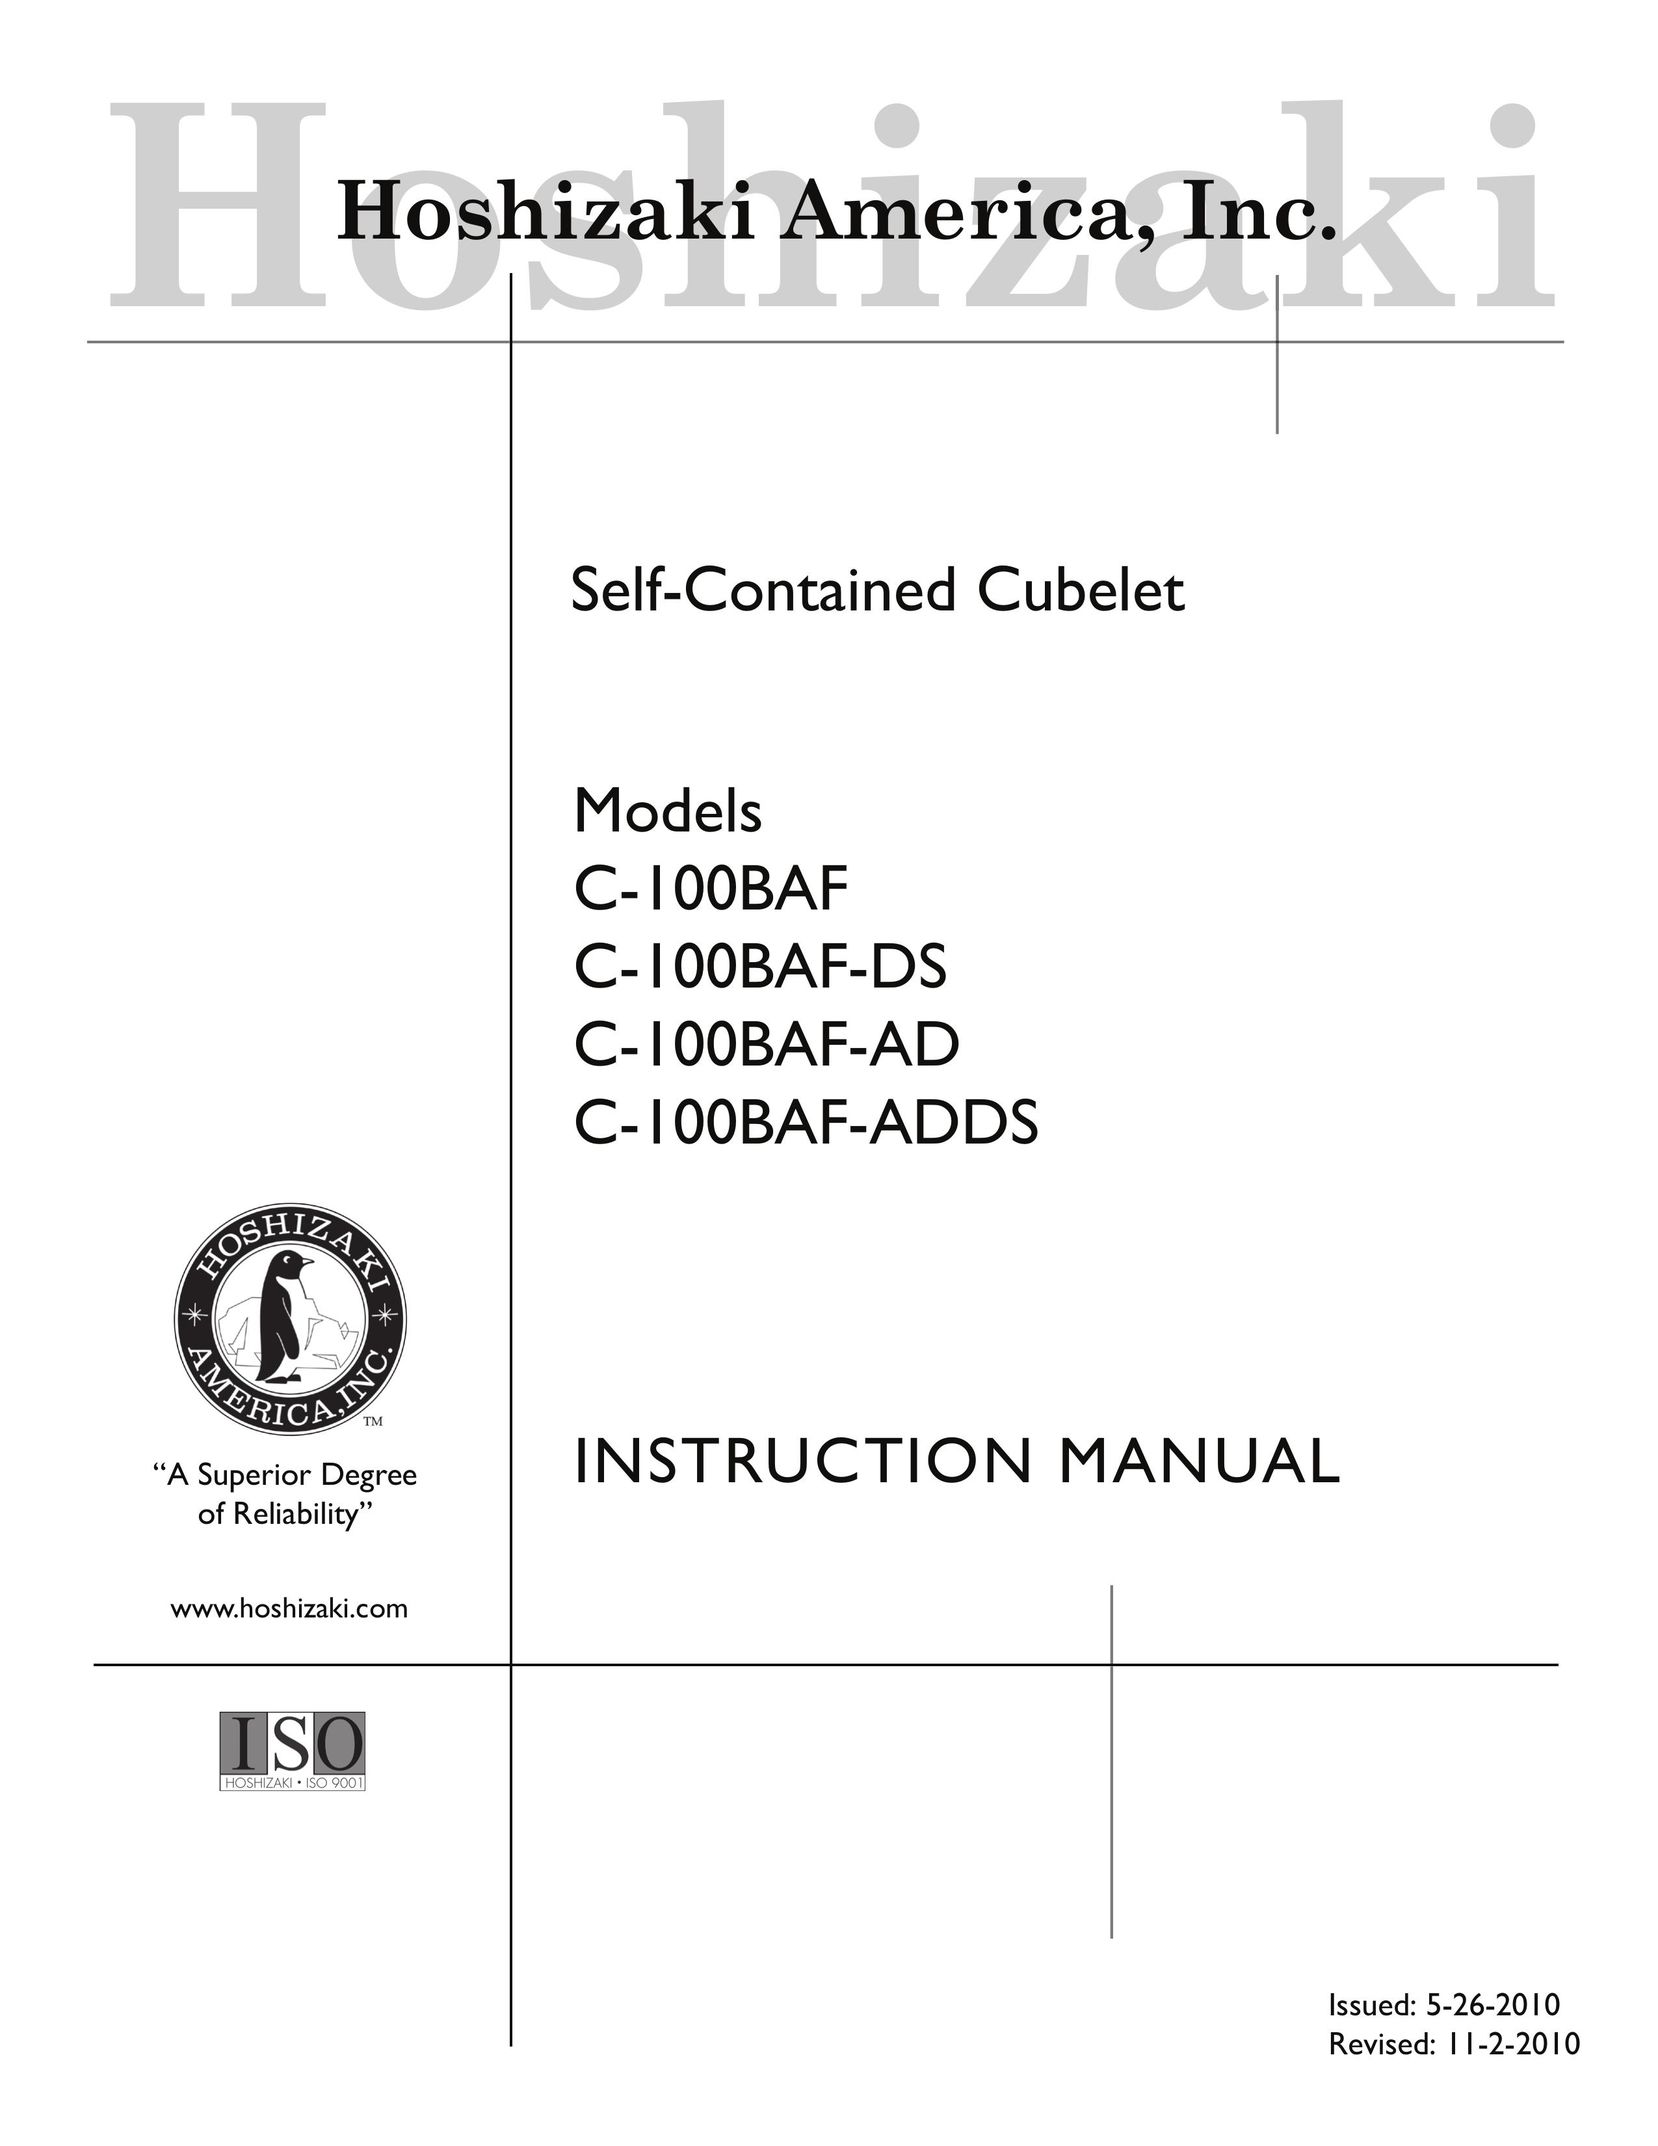 Hoshizaki C-100BAF Ice Maker User Manual